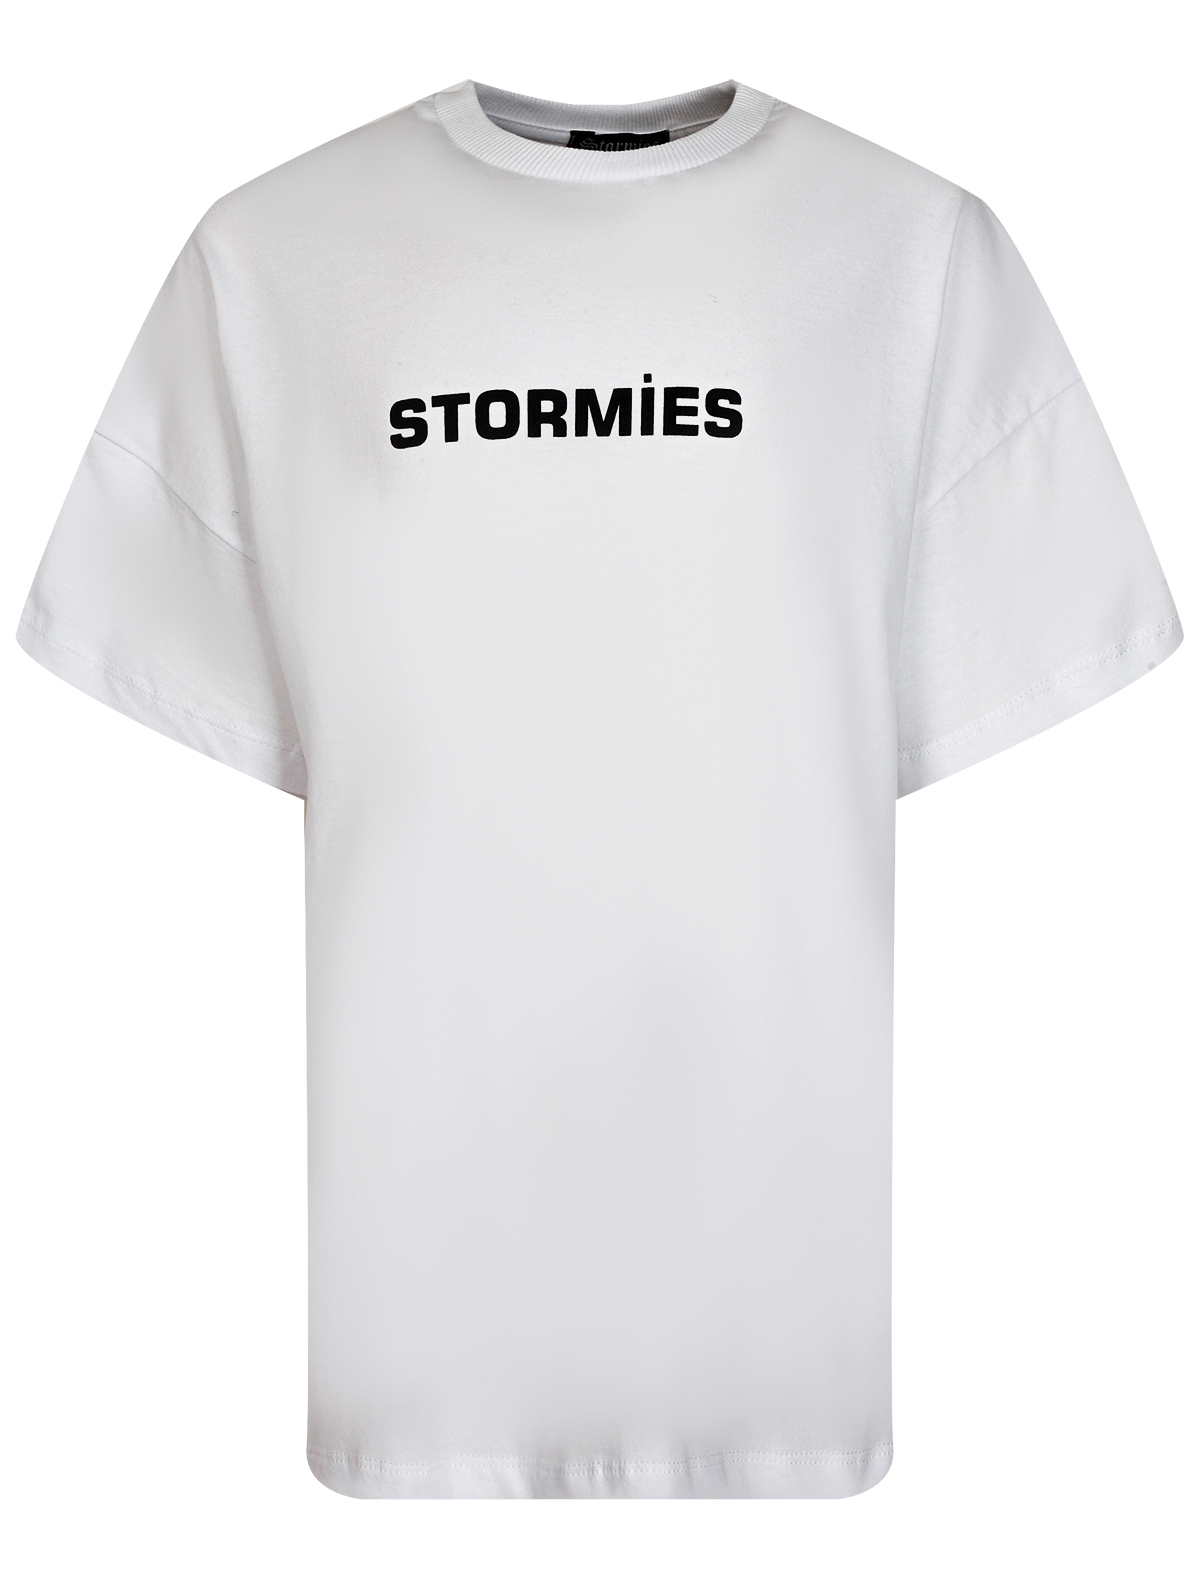 Футболка Stormies 2615501, цвет белый, размер 13